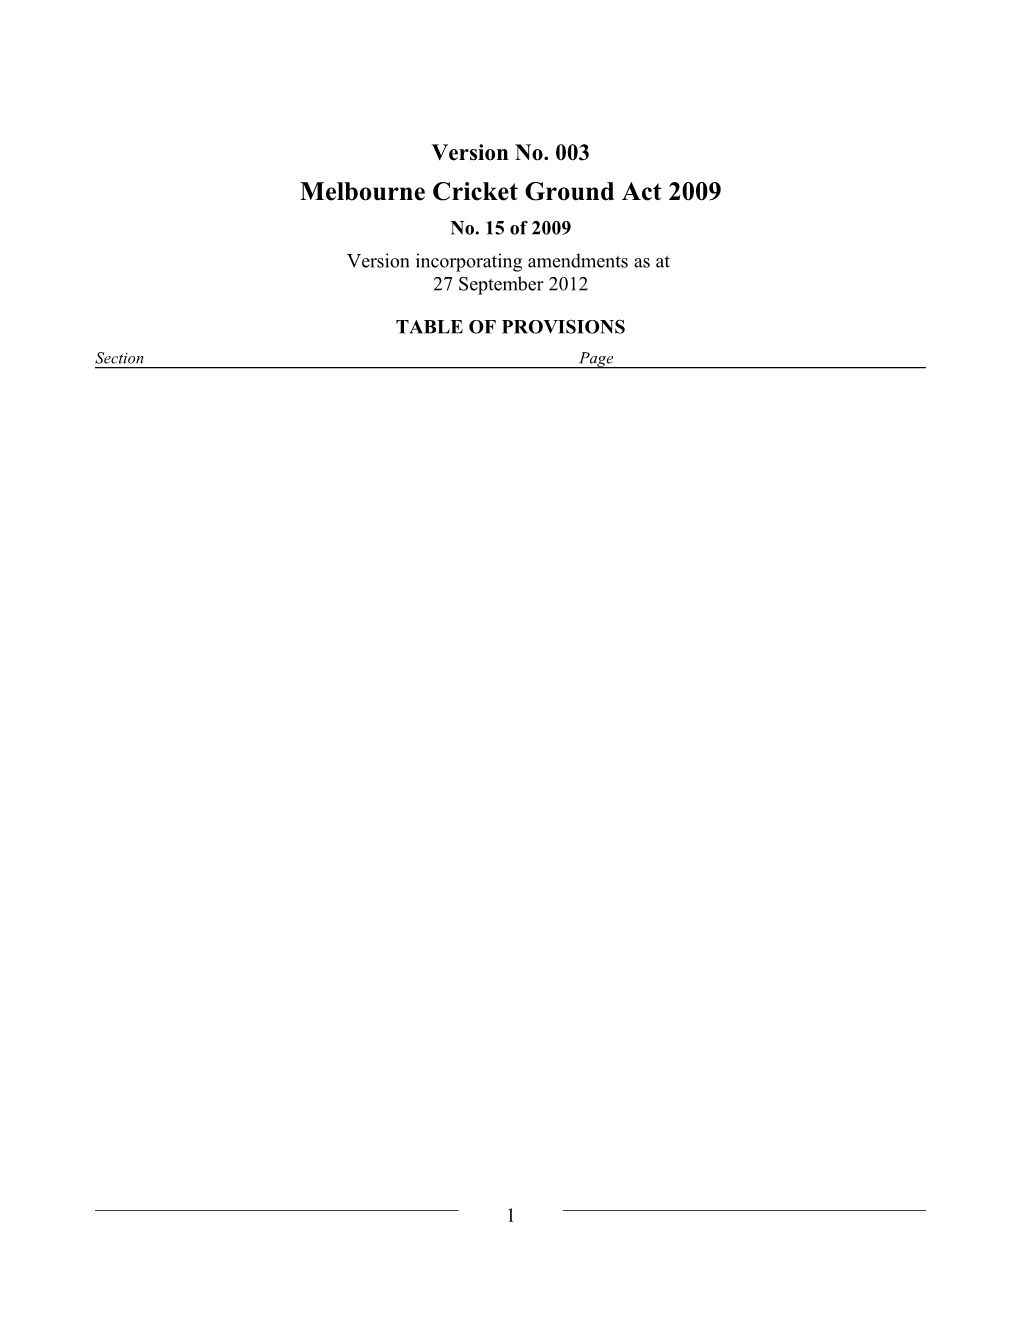 Melbourne Cricket Ground Act 2009